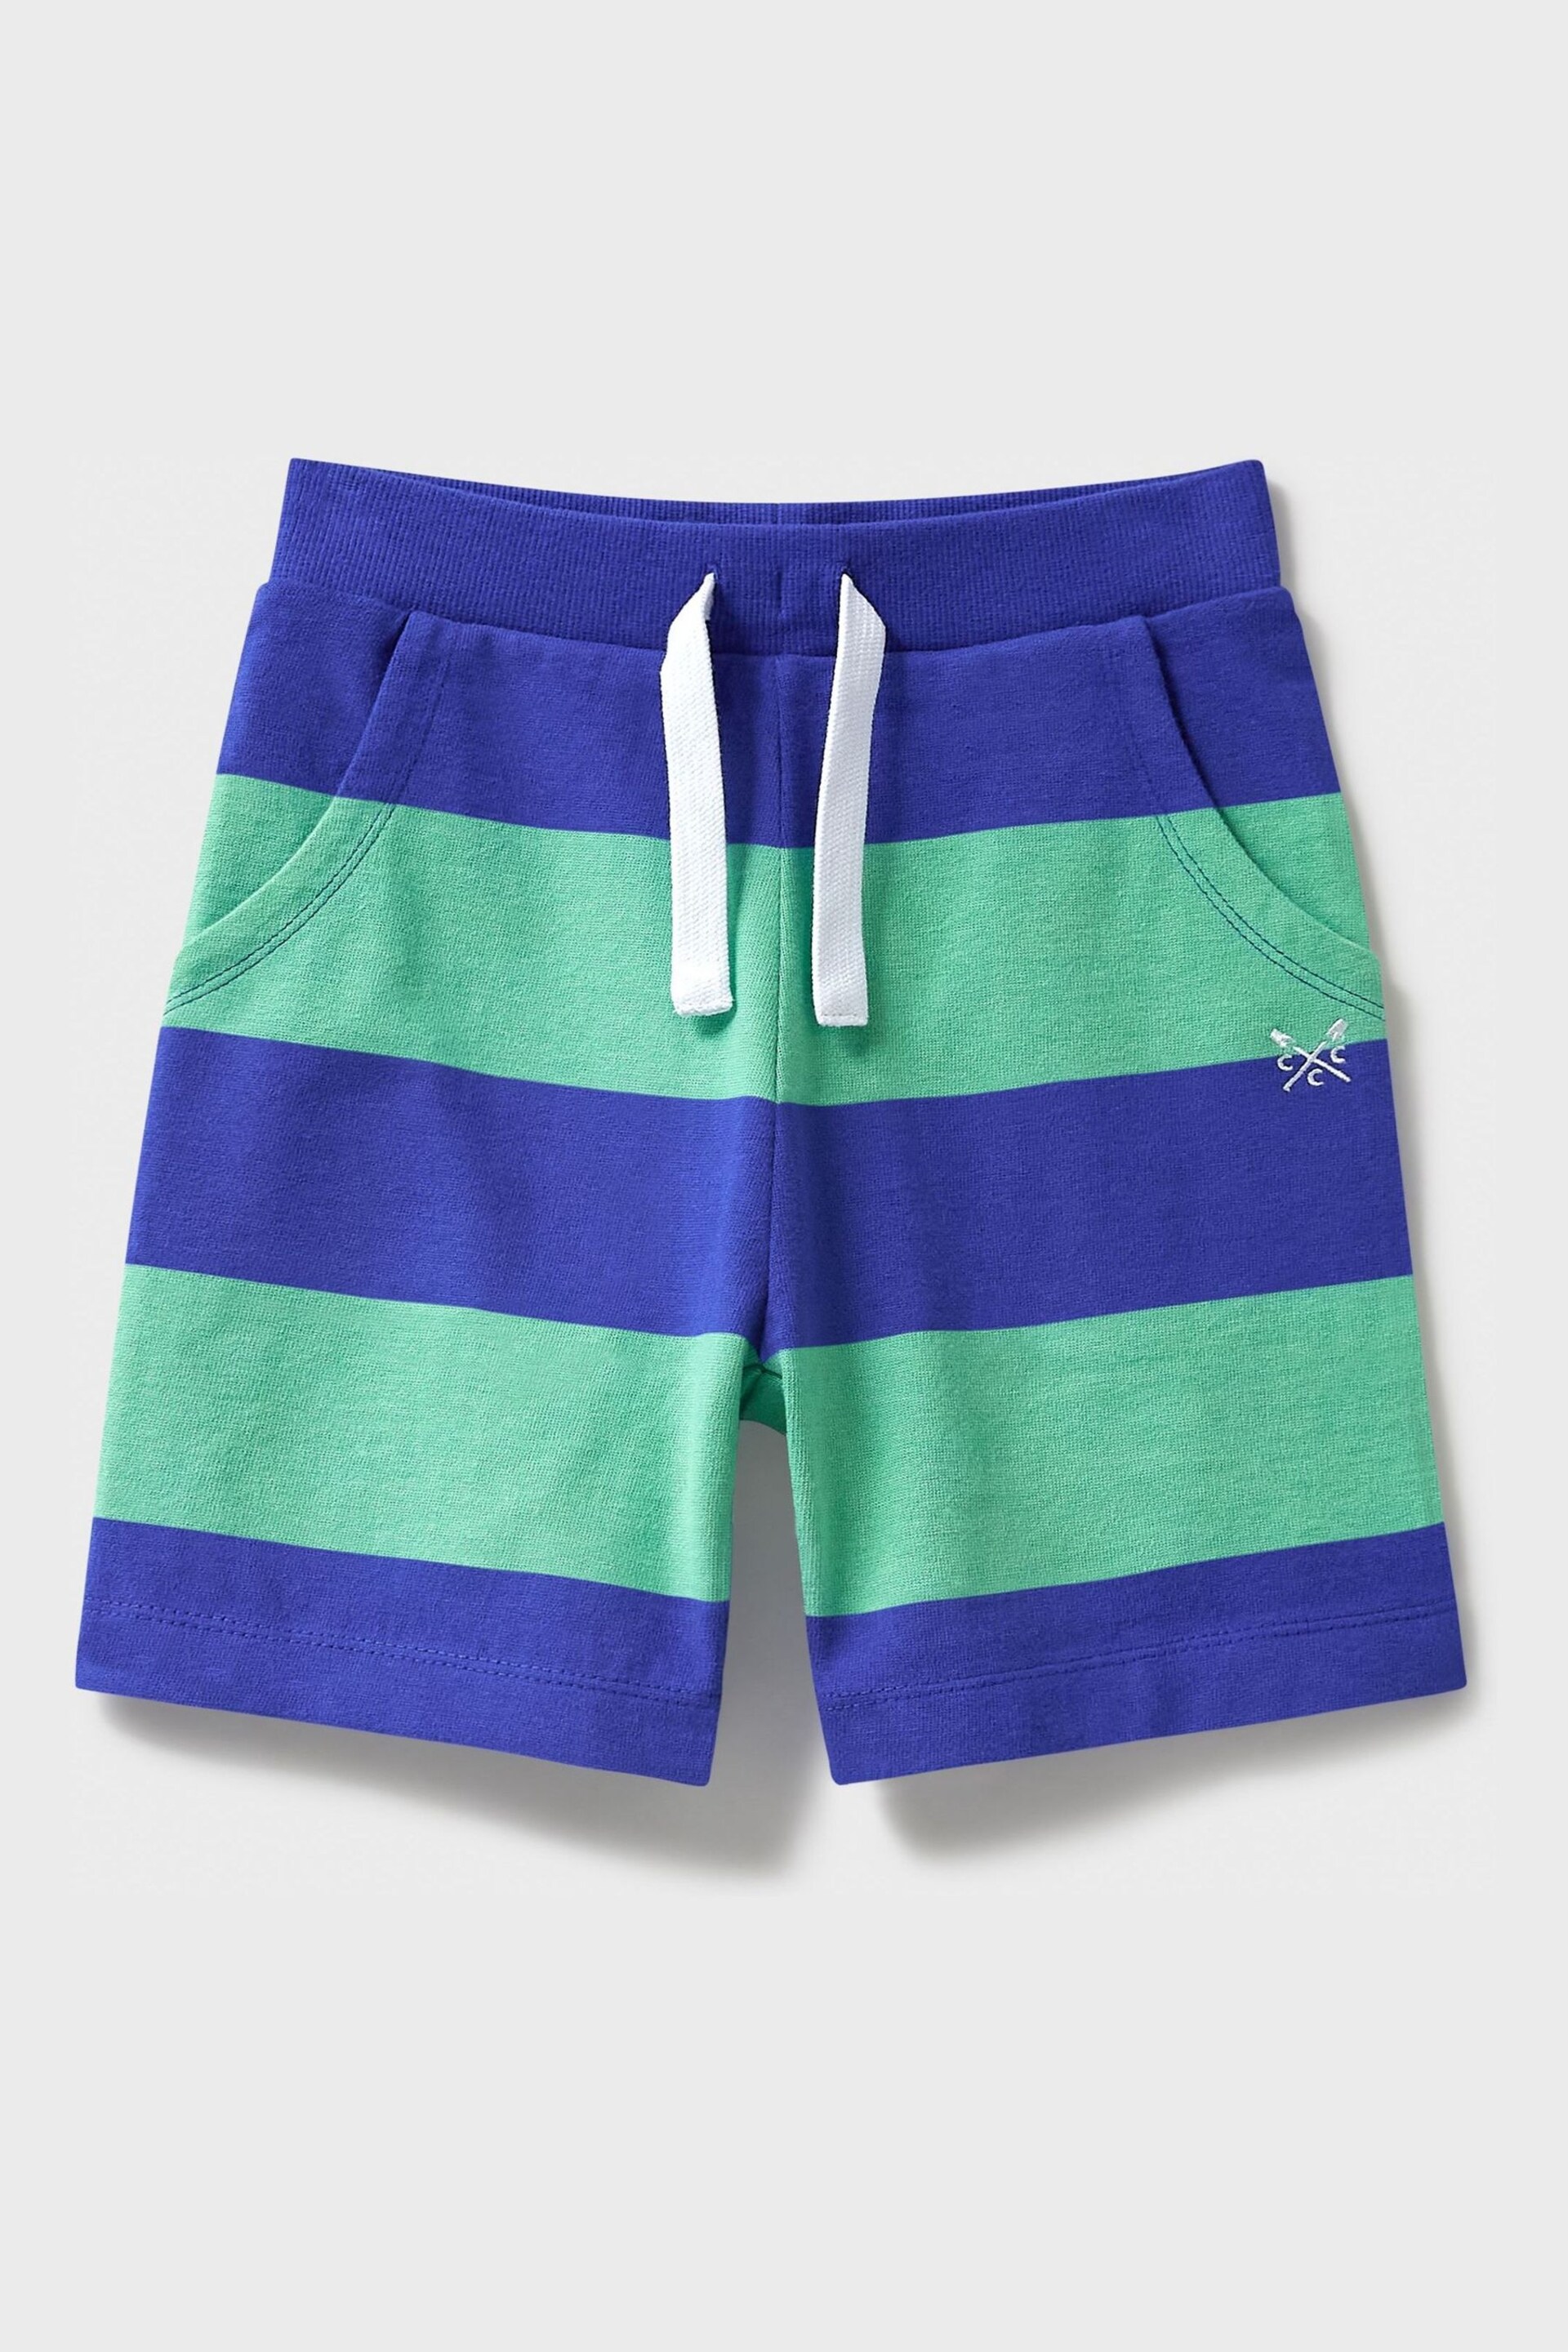 Crew Clothing Stripe Jersey Drawstring Shorts - Image 1 of 3